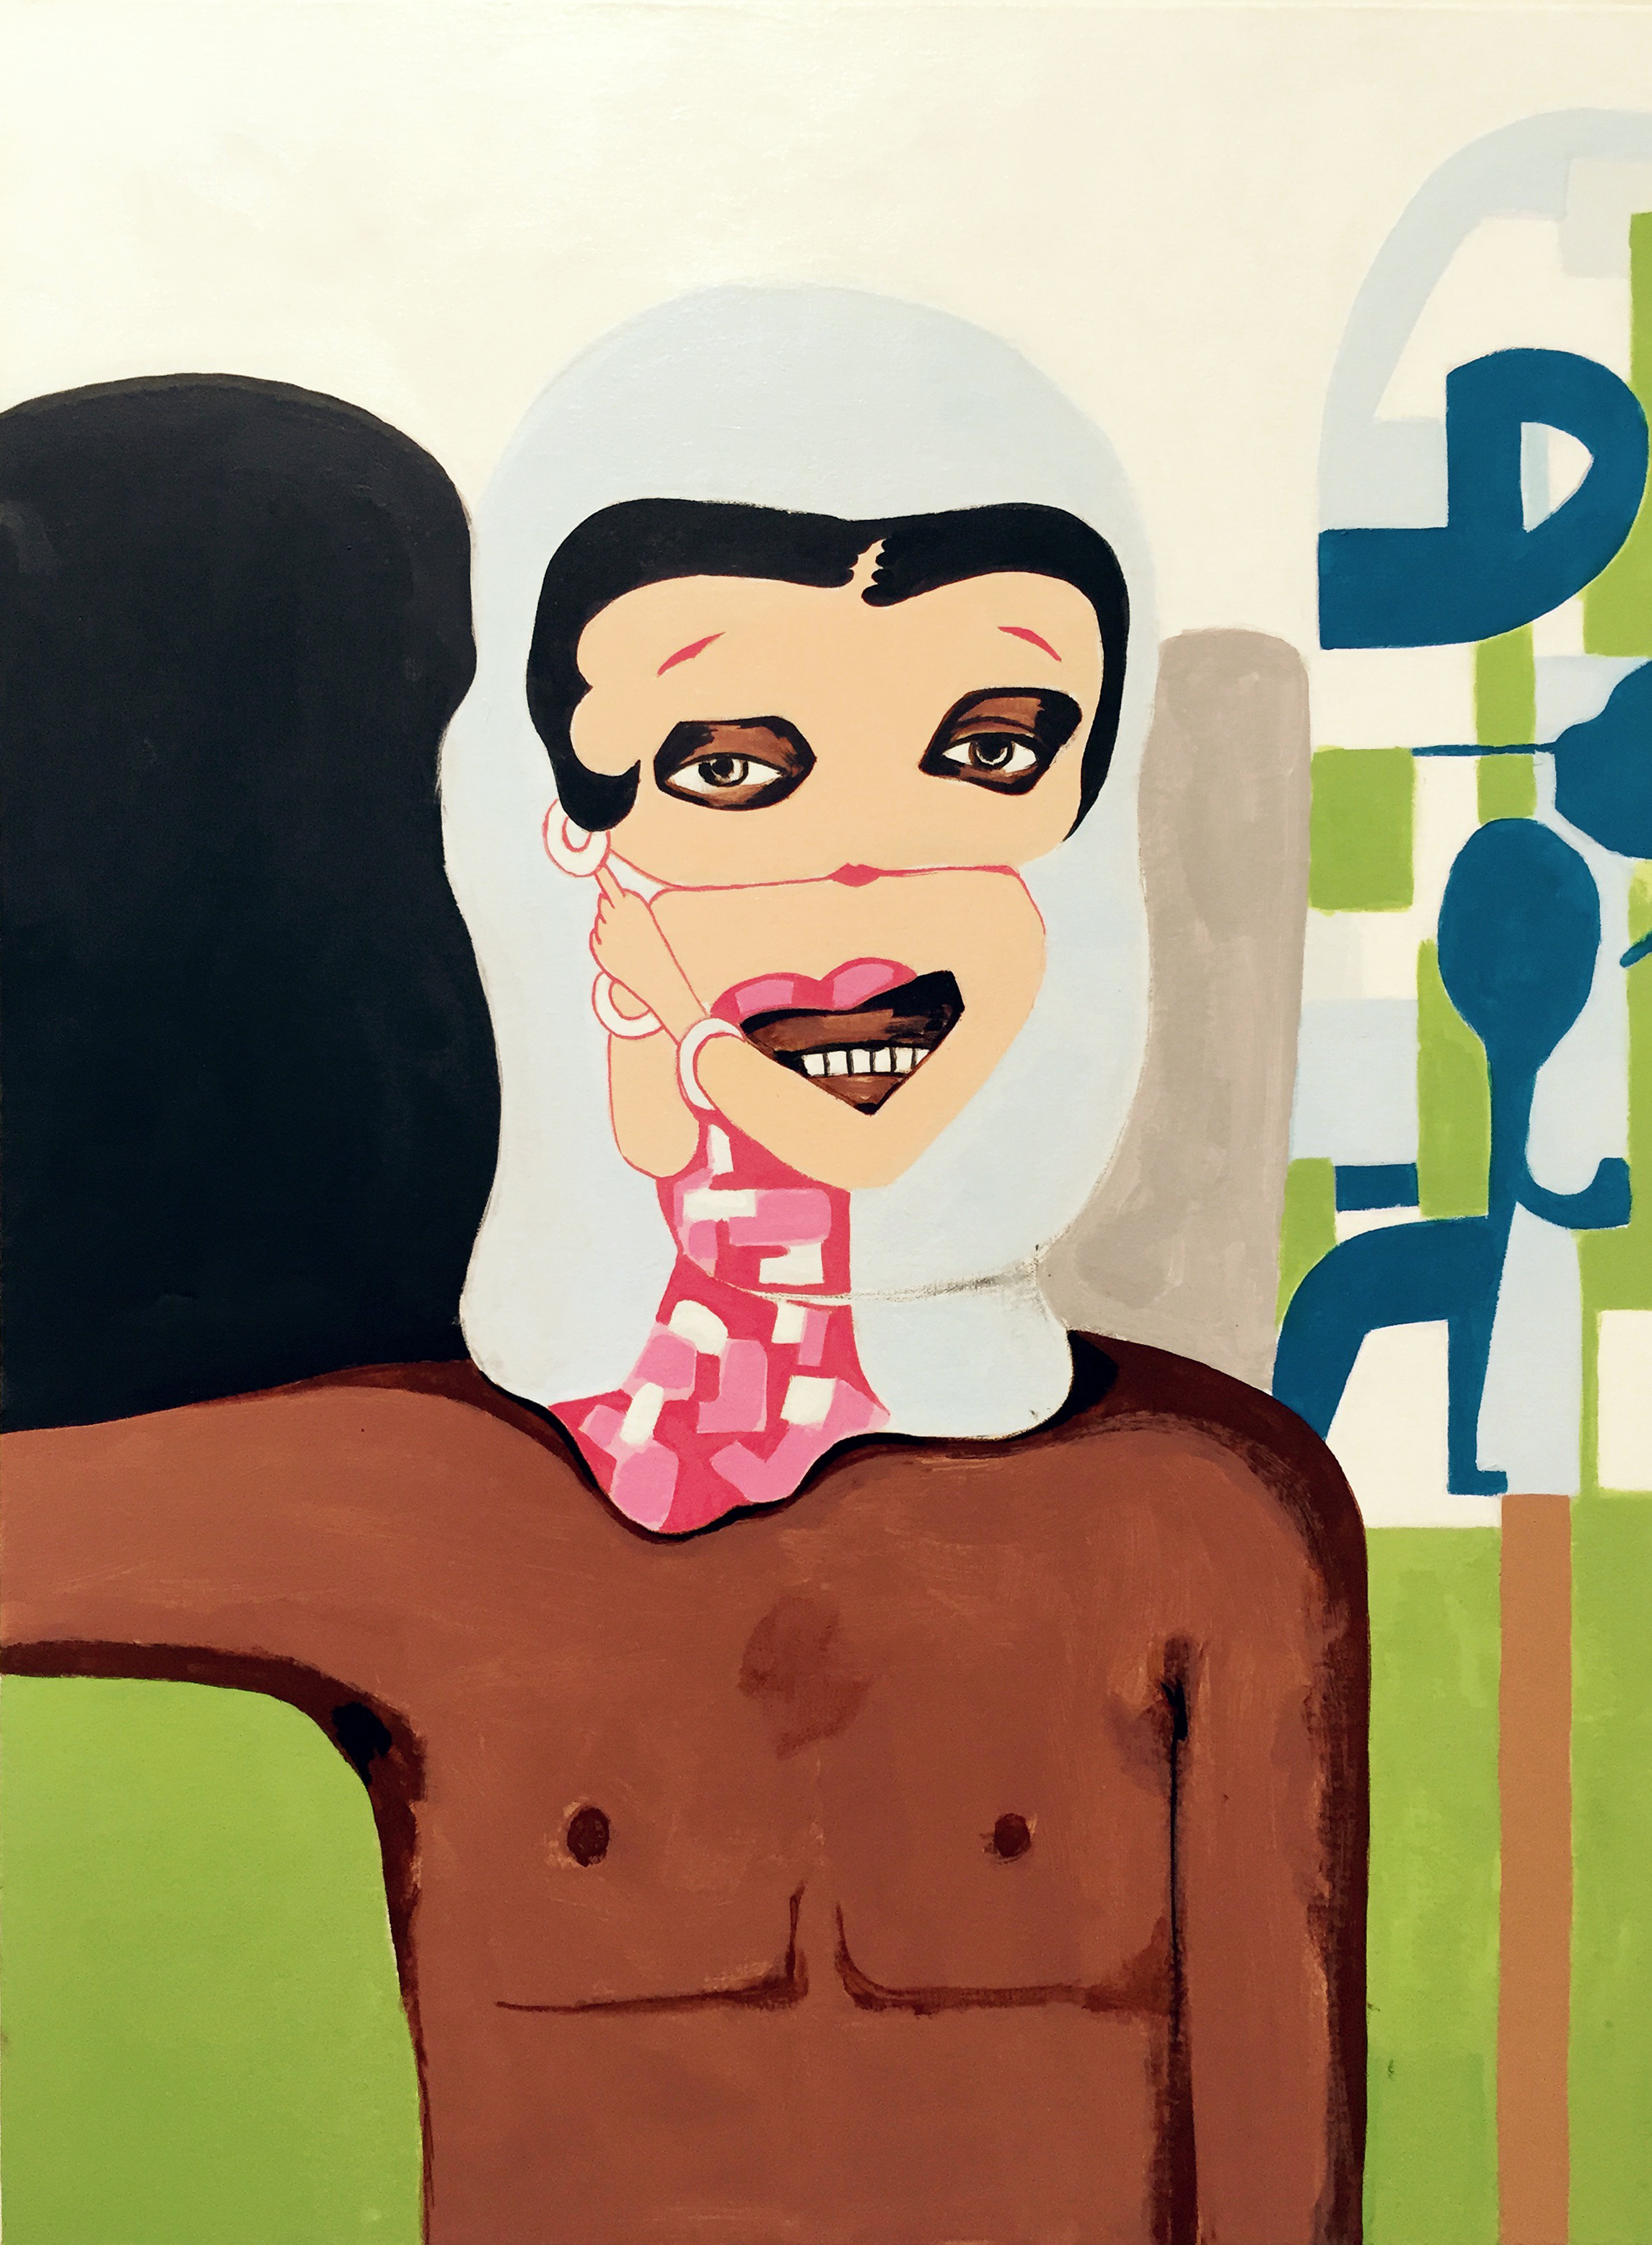 David Humphrey, "Boob Mask" 2016, Acrylic on canvas, 20 x 28"